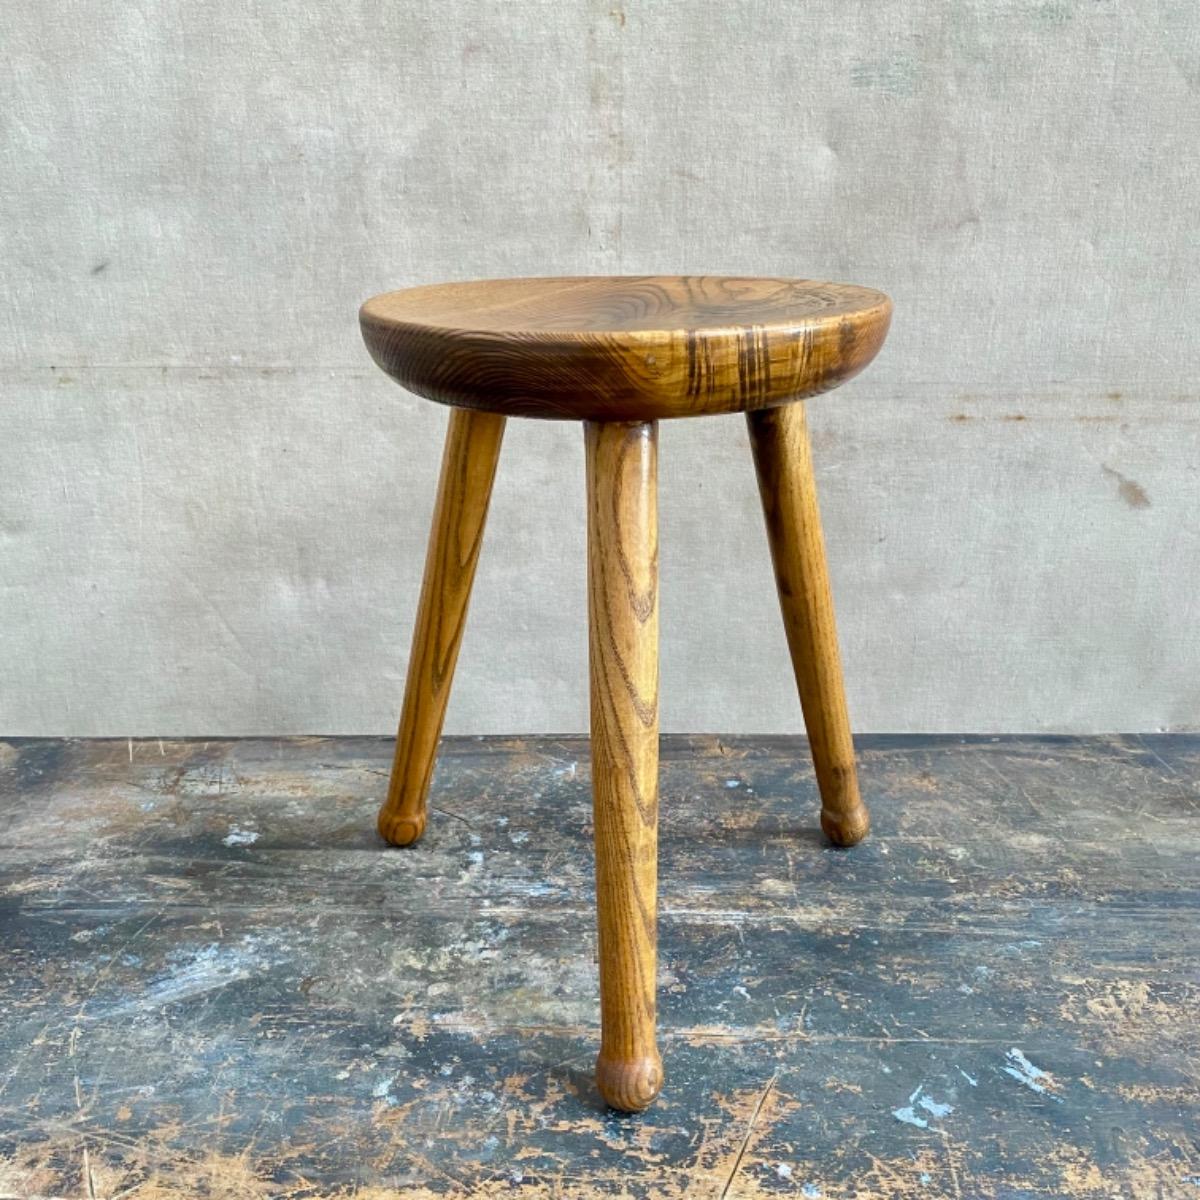 Modernist stool